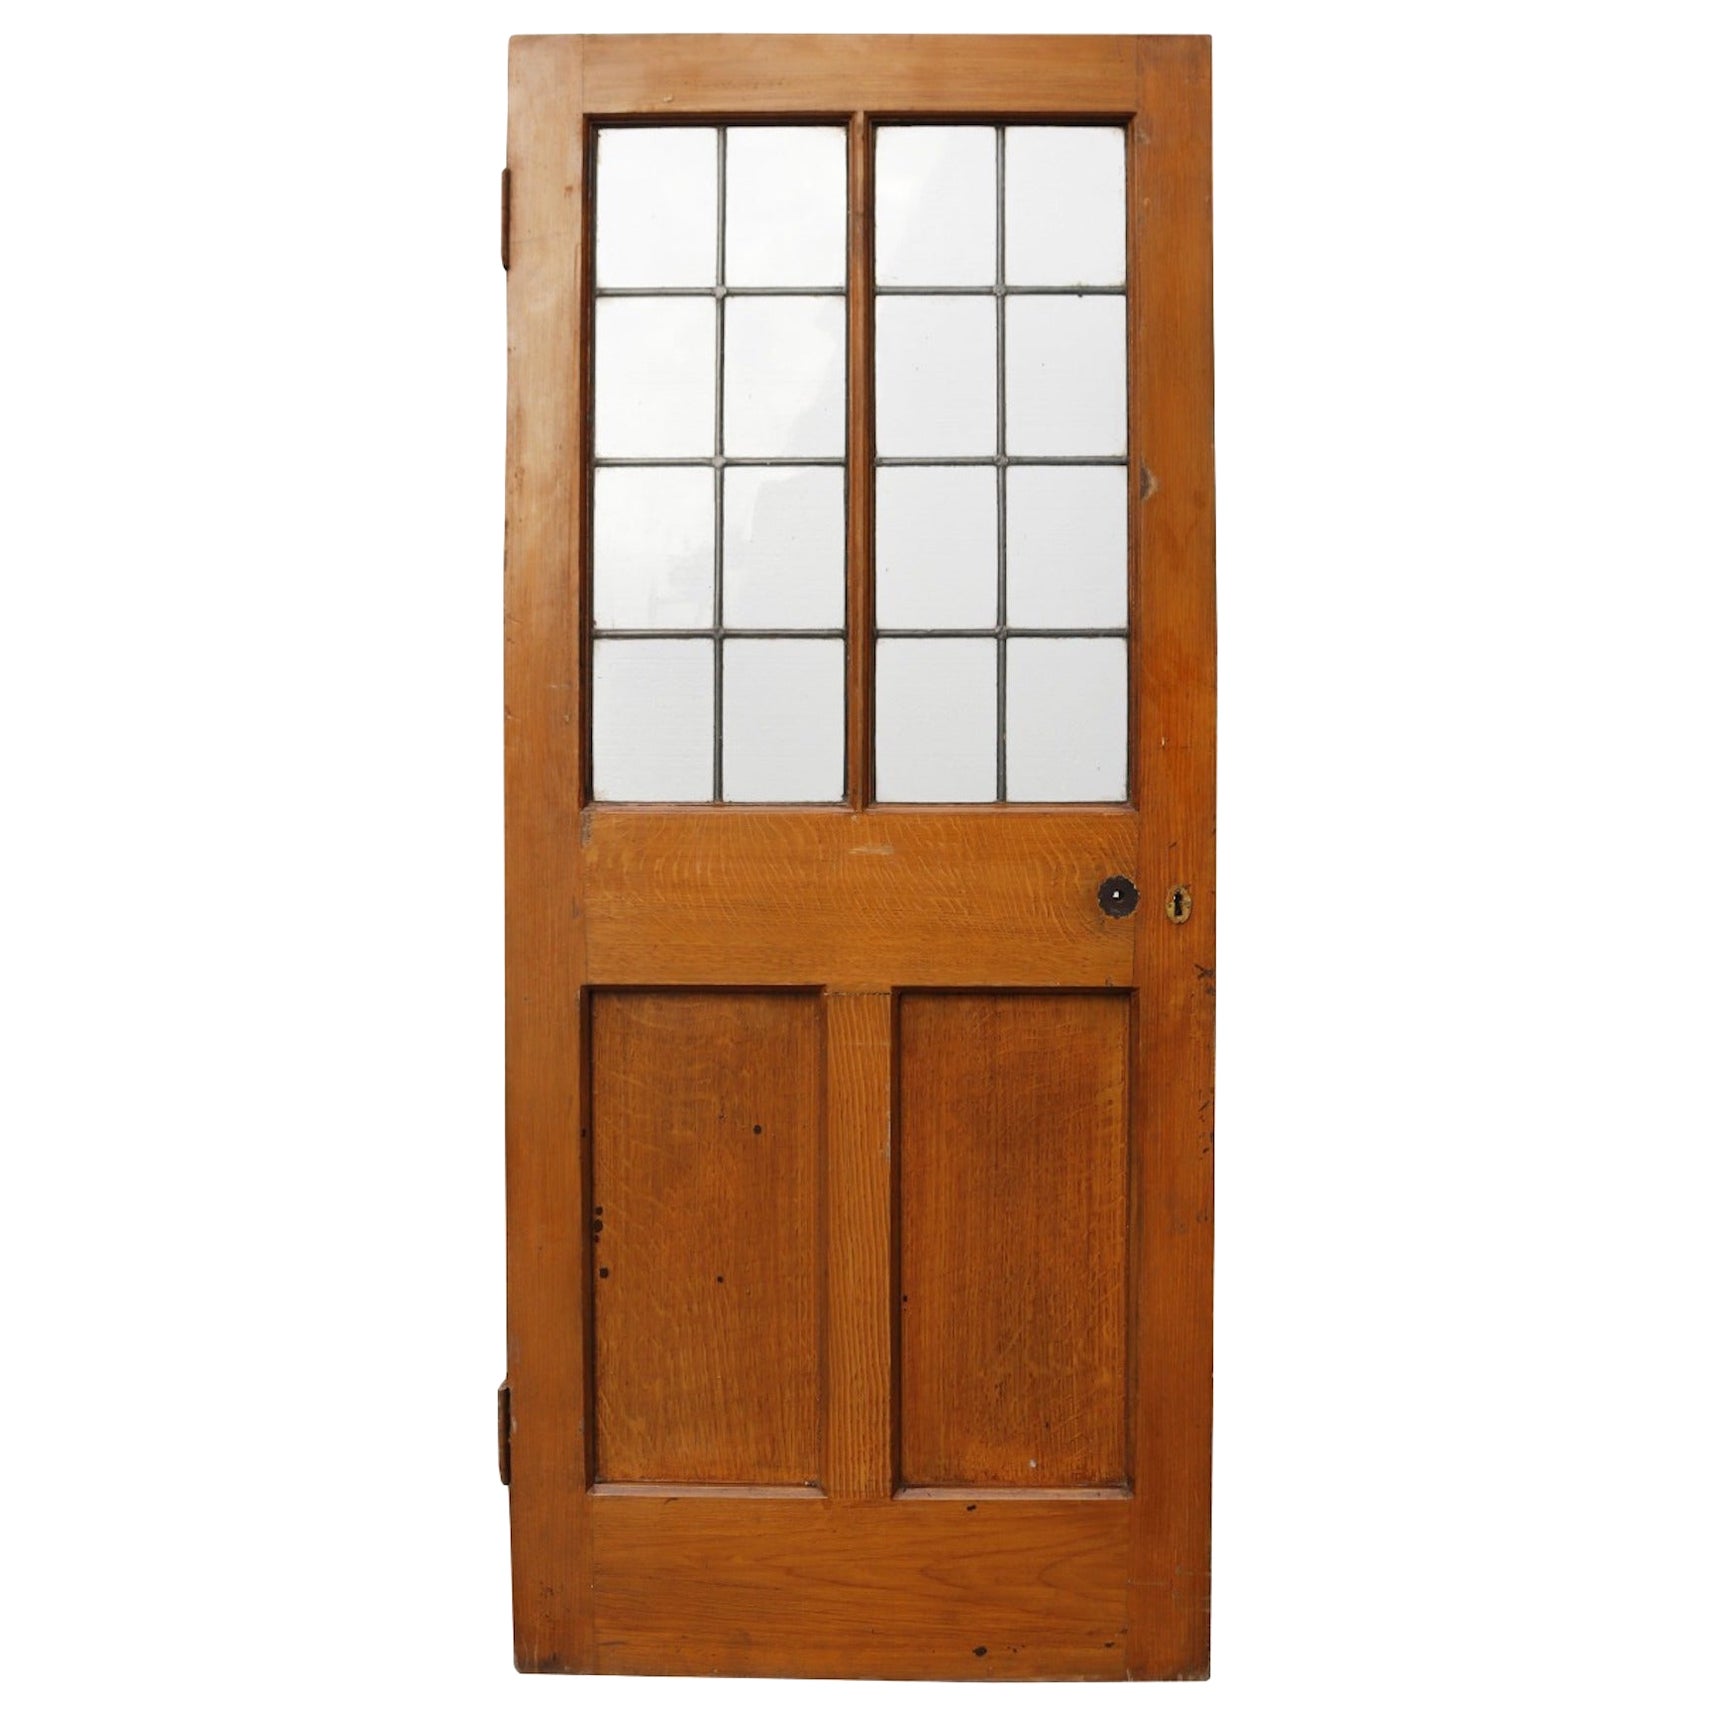 Antique Pine Door with Glazed Panels For Sale